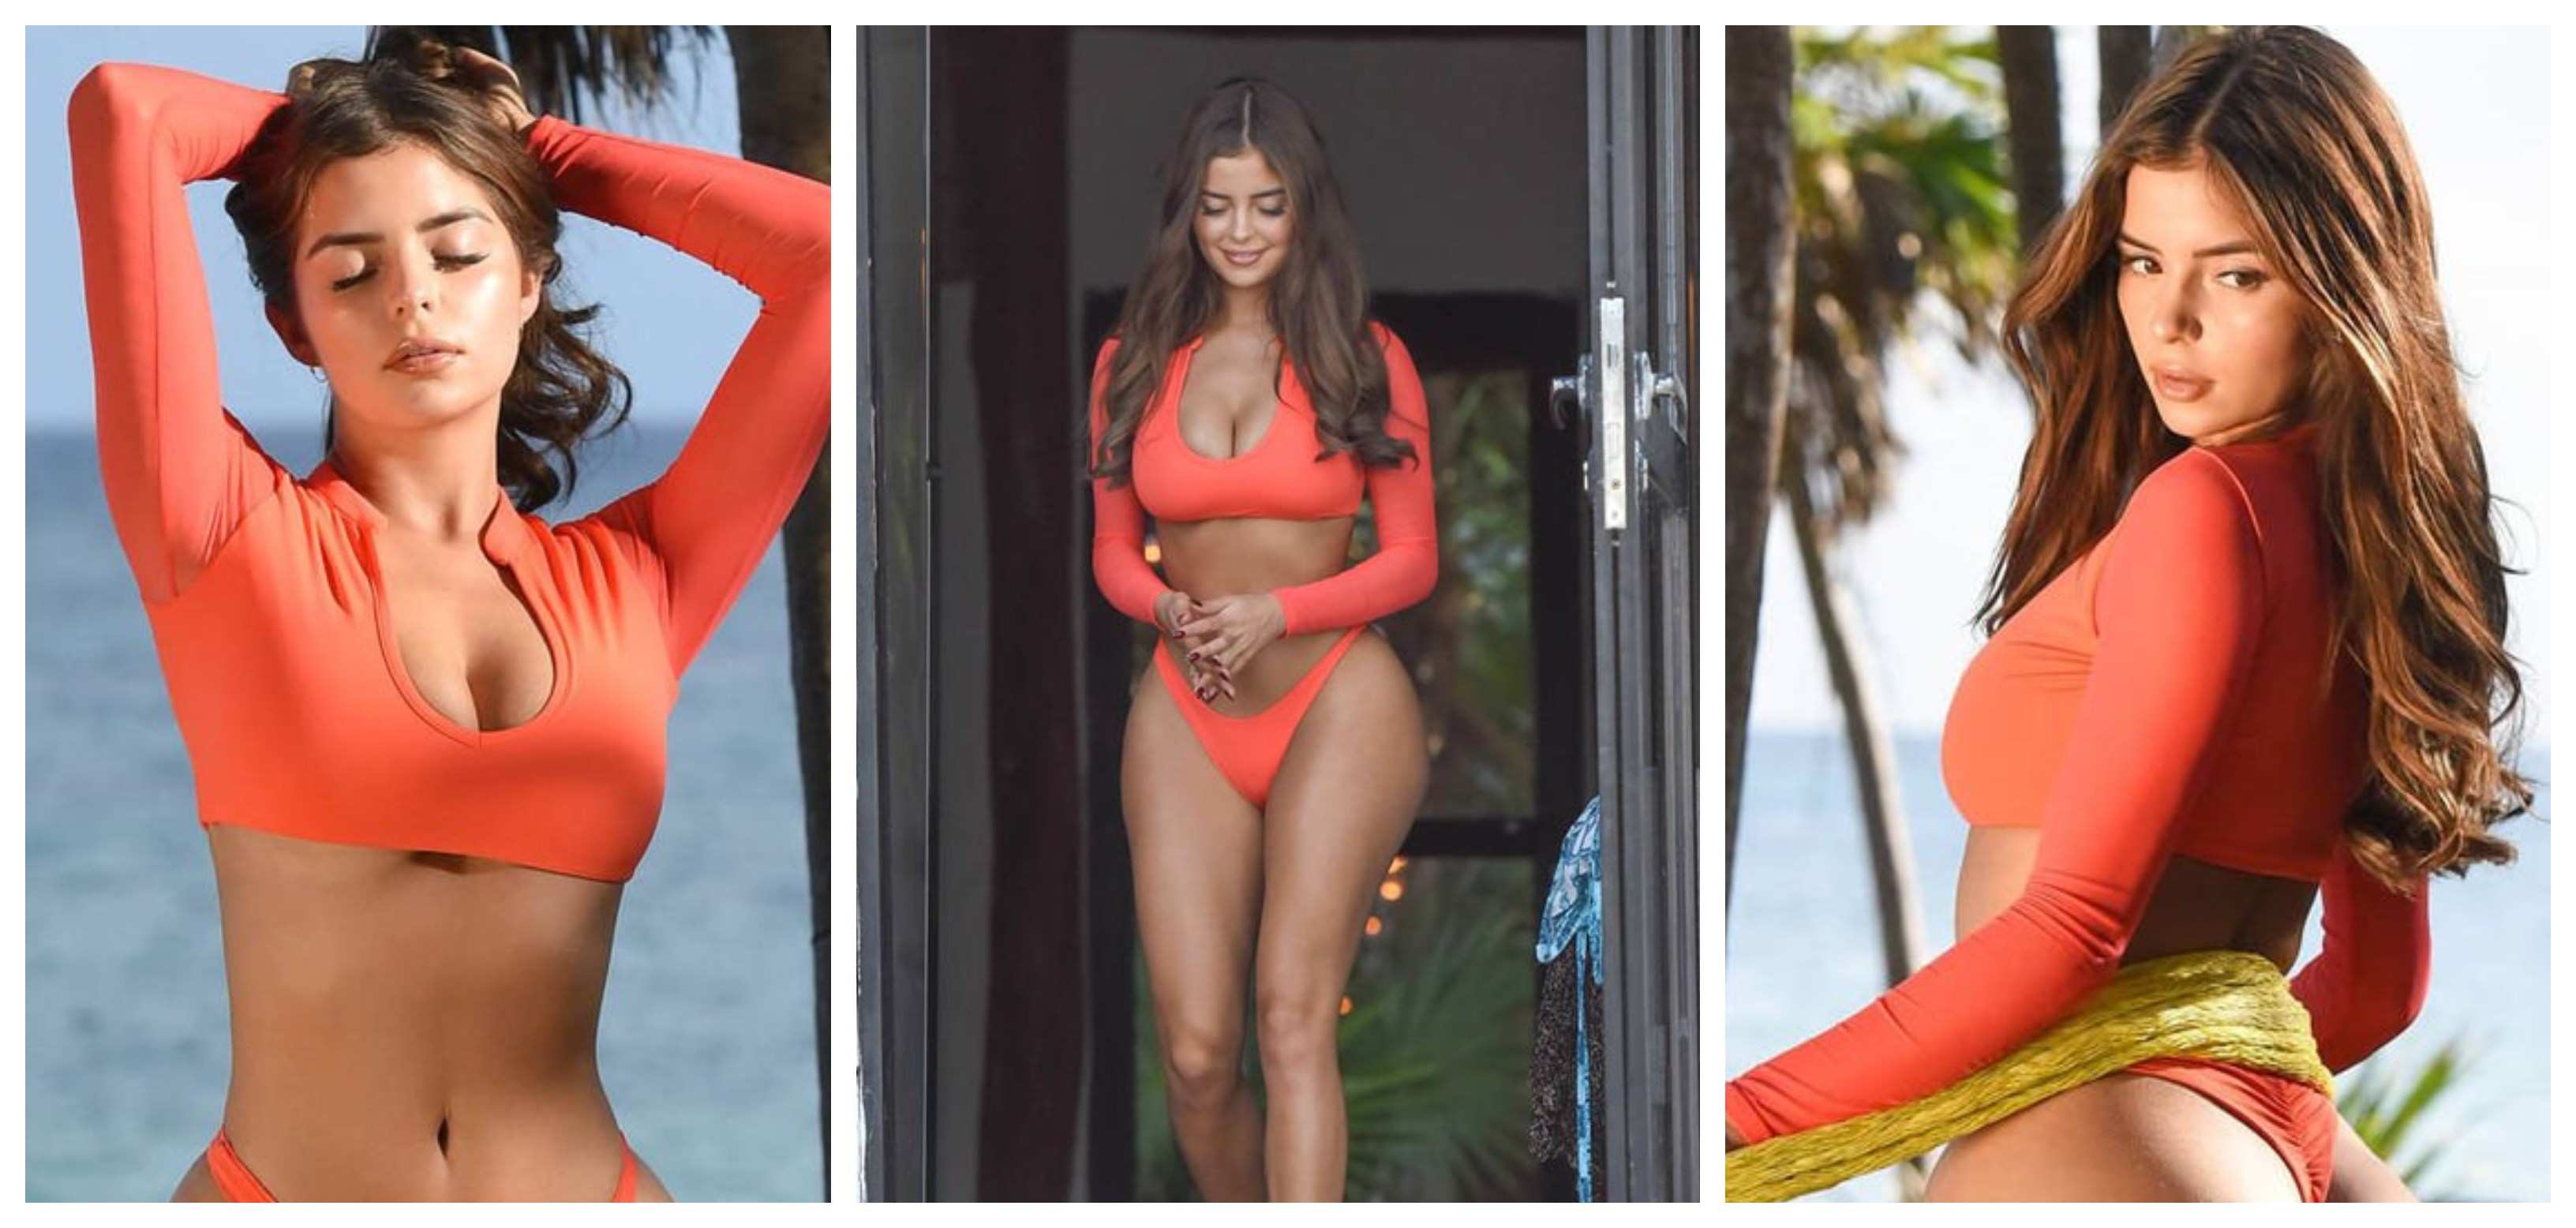 Instagram bombshell DEMI ROSE exposes in EYE-POPPING thong bikini pictures